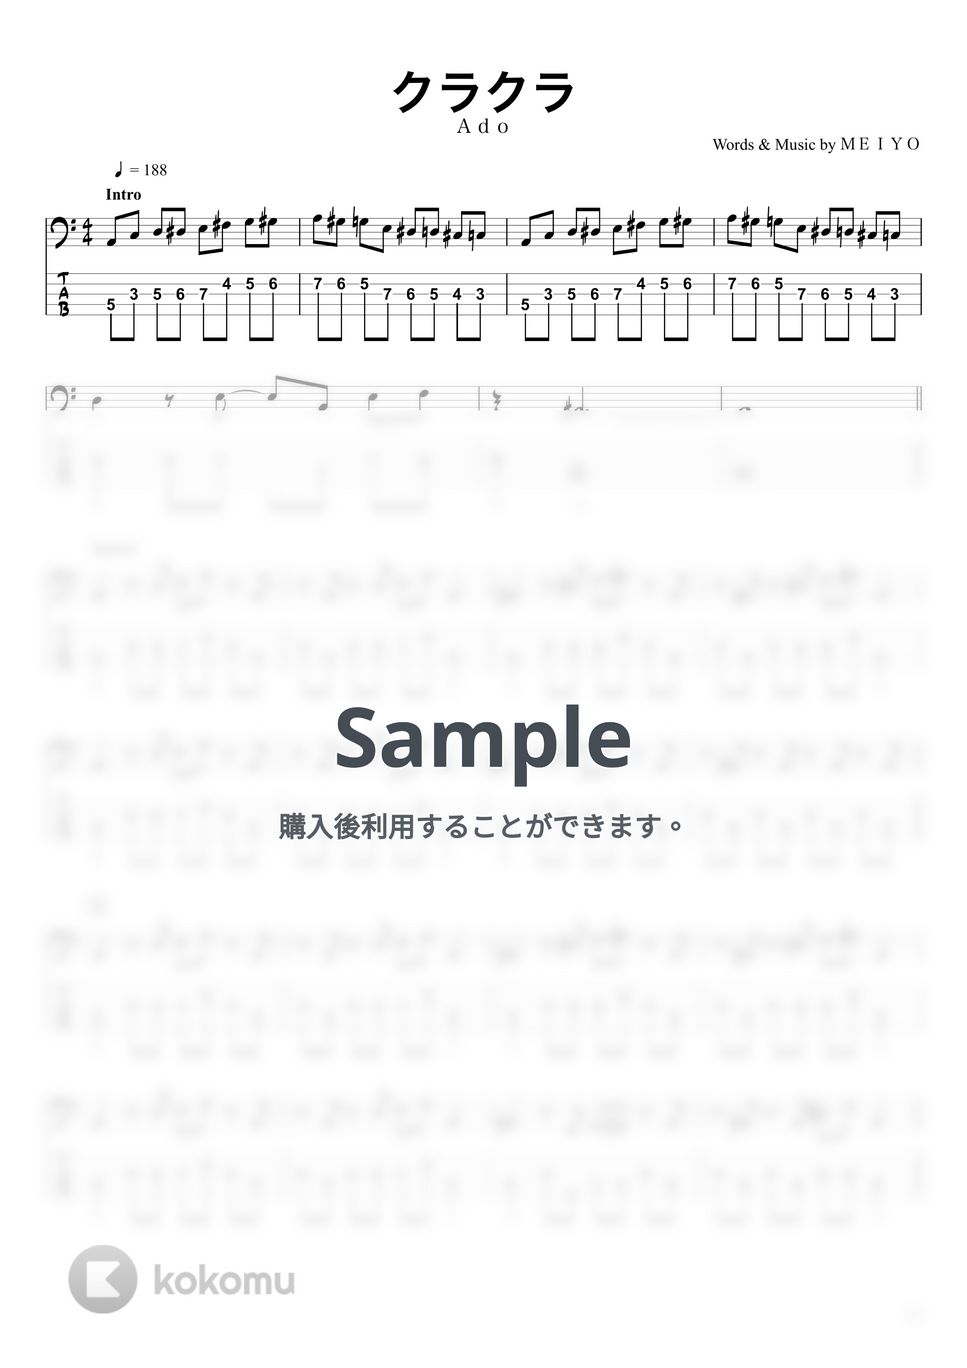 Ａｄｏ - クラクラ (ベースTAB譜☆5弦ベース対応) by swbass